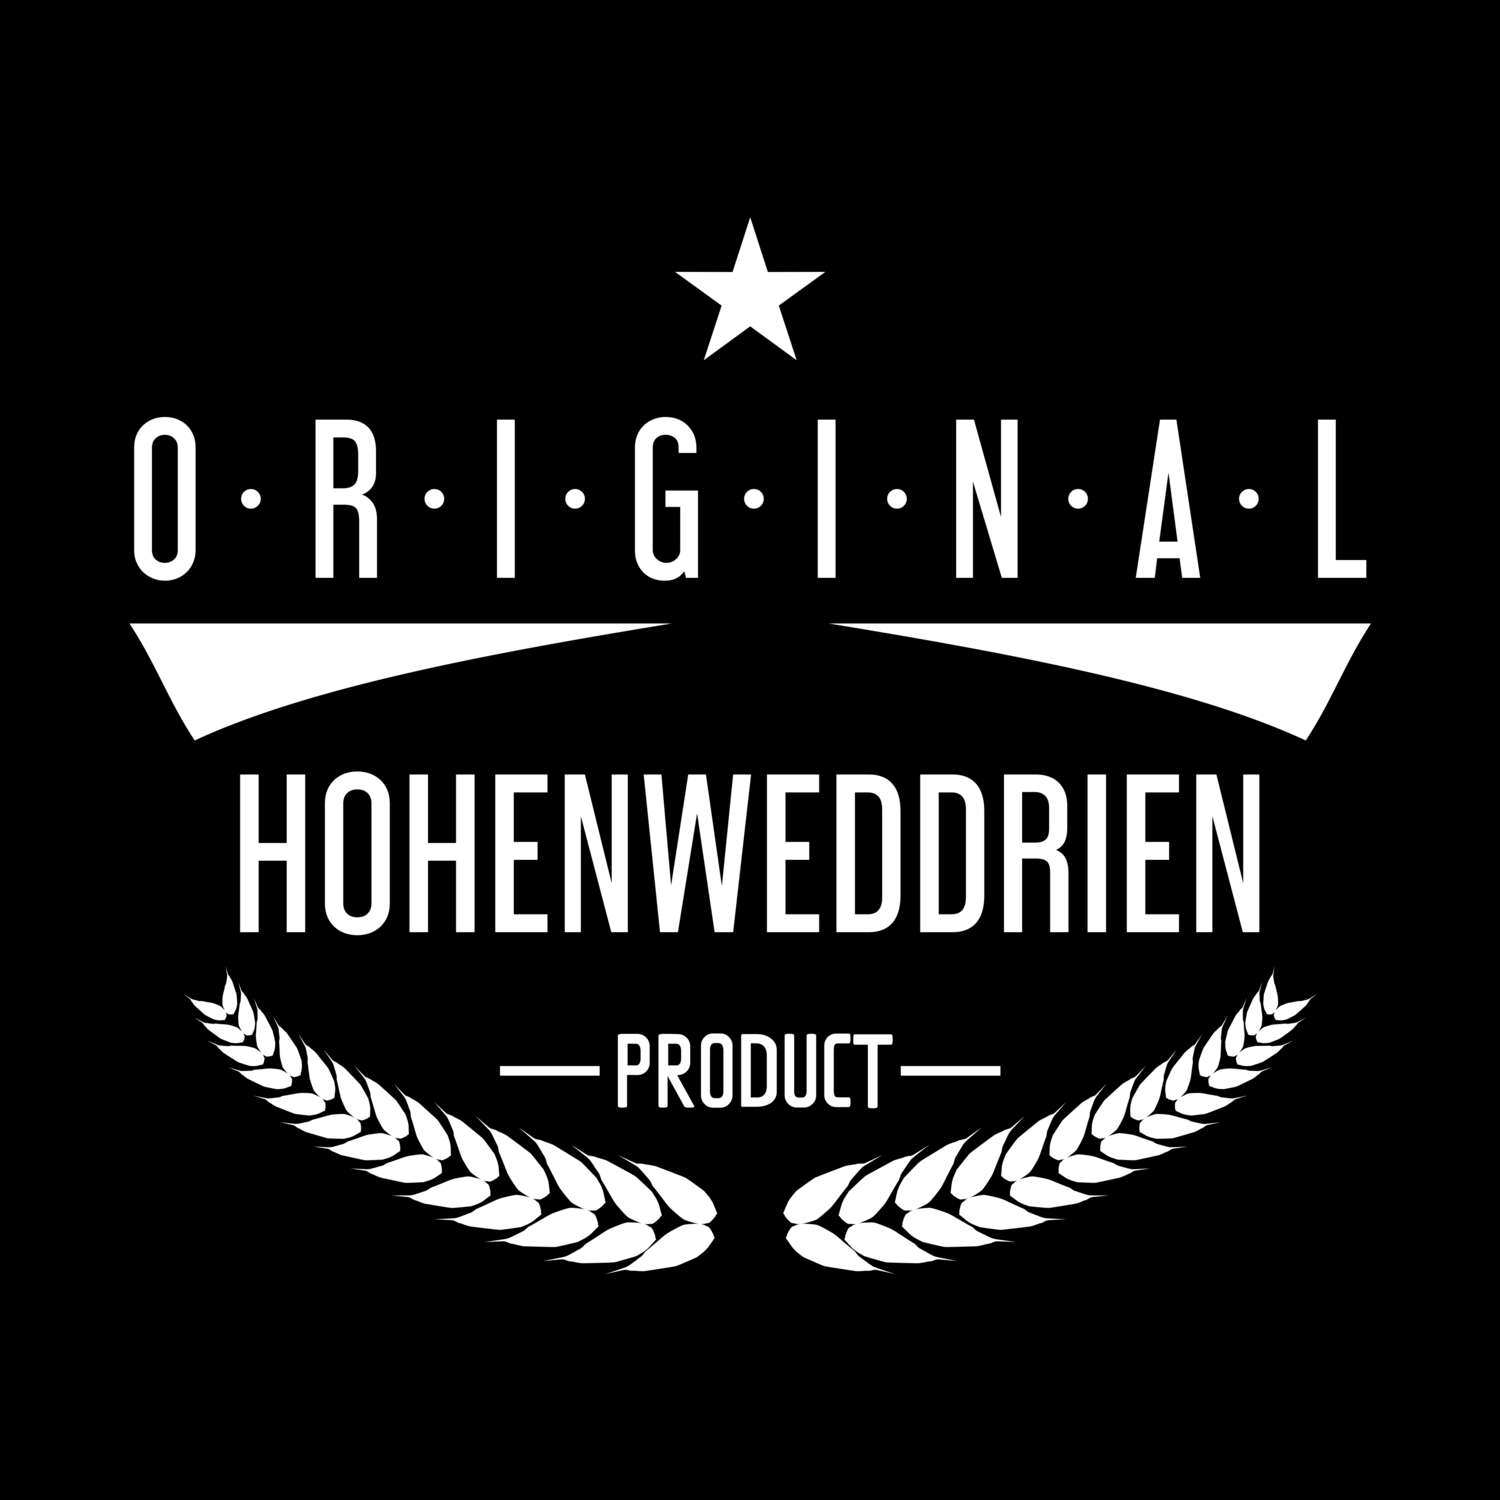 Hohenweddrien T-Shirt »Original Product«